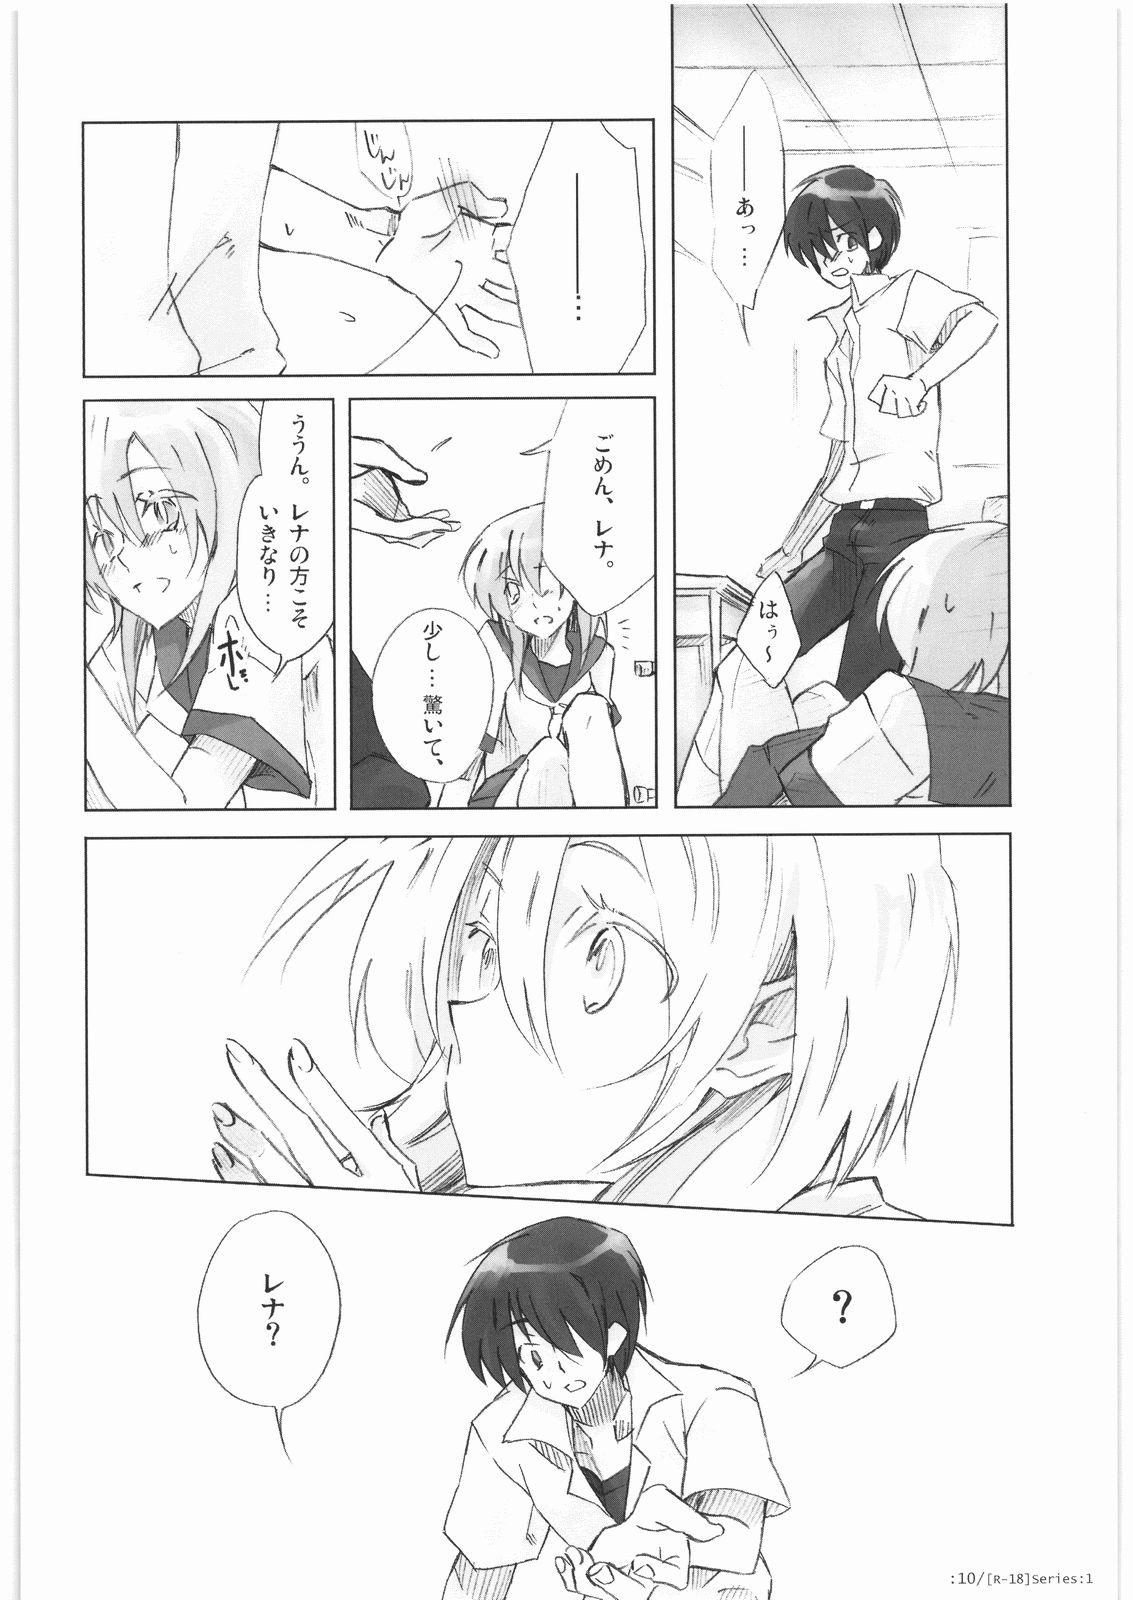 Gay Orgy R-18 Series:1 - Higurashi no naku koro ni Hunks - Page 9